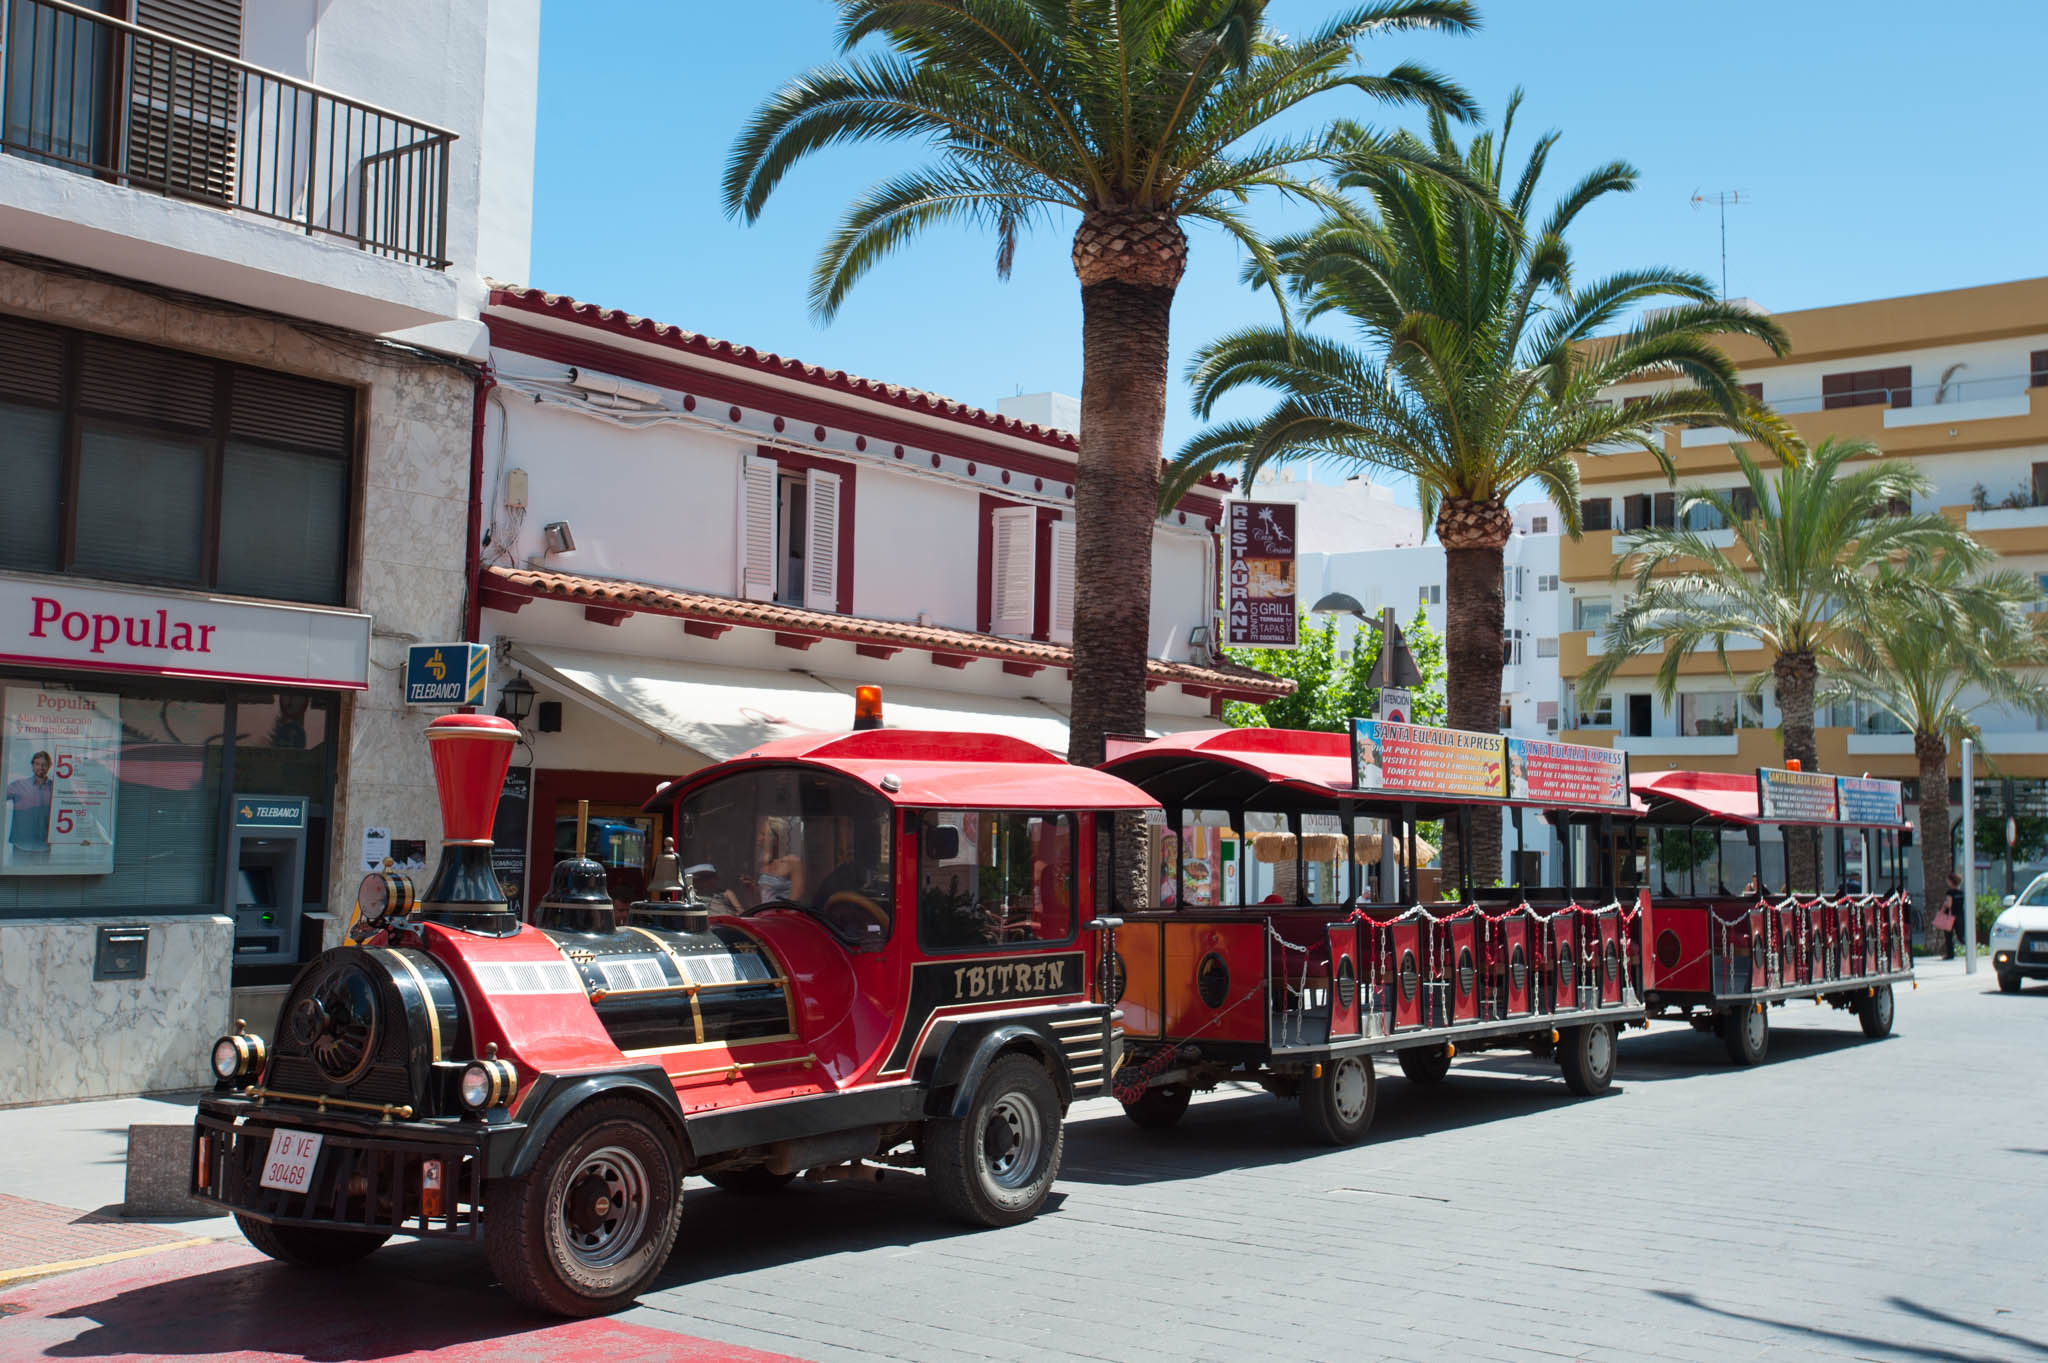 Ibiza tourist train